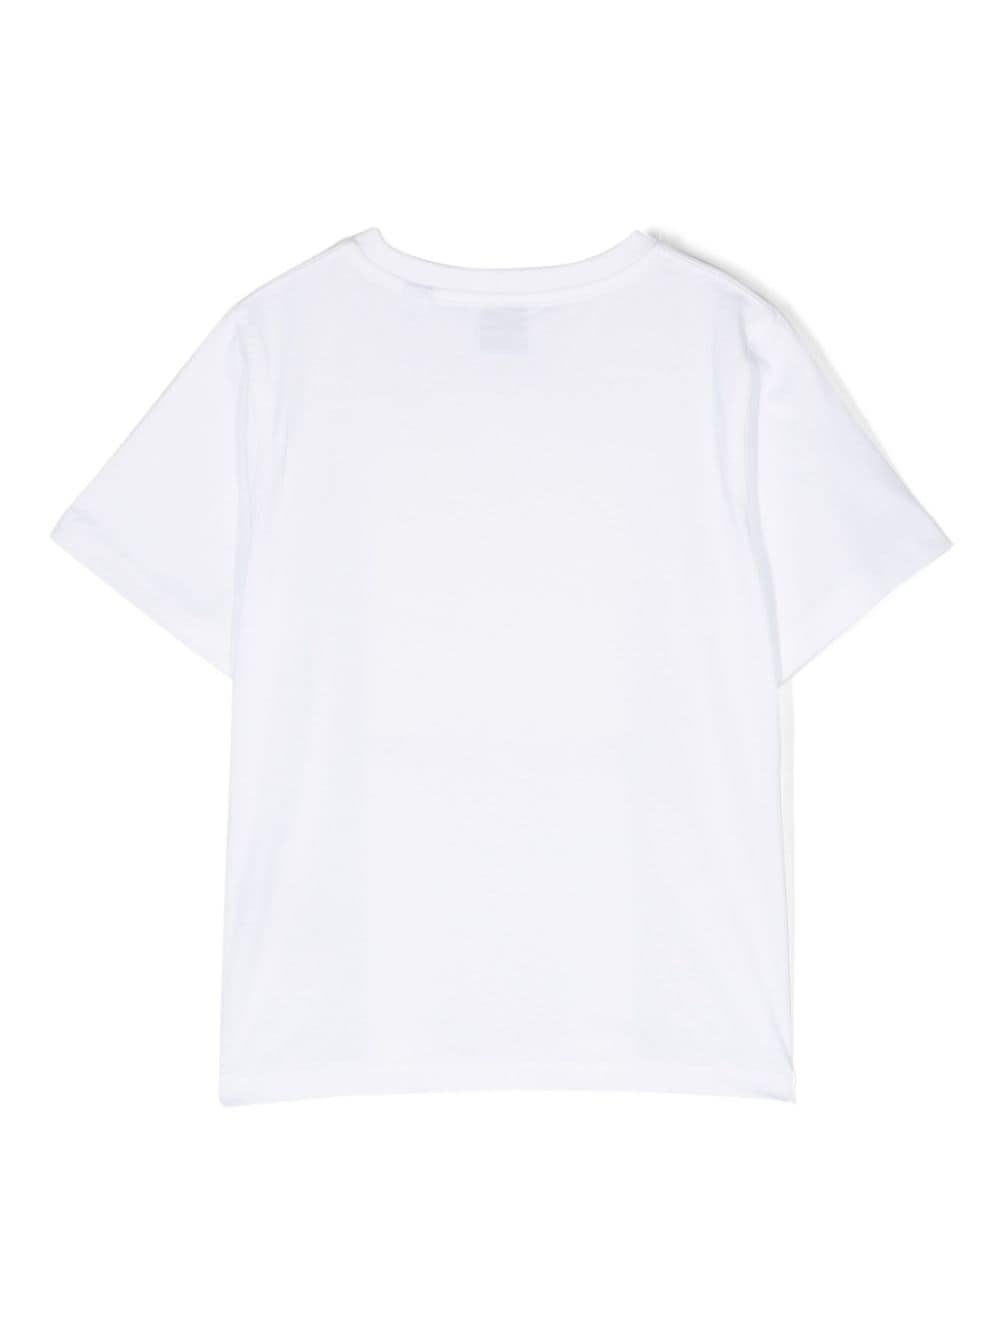 White cotton jersey boy BURBERRY t-shirt